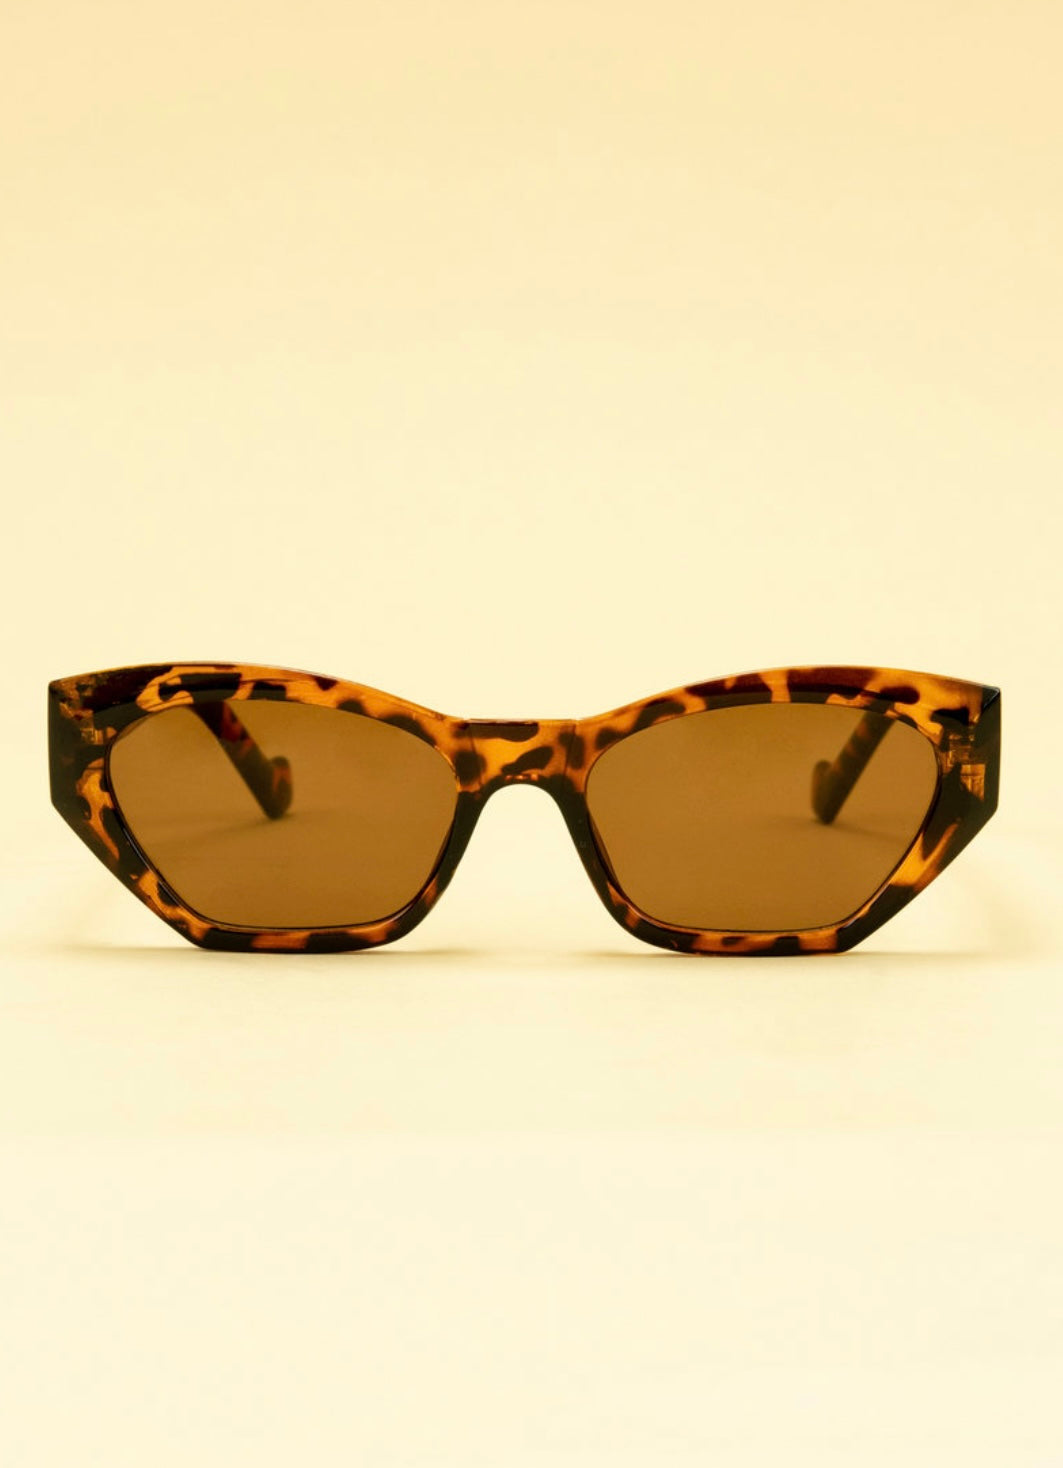 Harlow Limited Edition Tortoiseshell Sunglasses